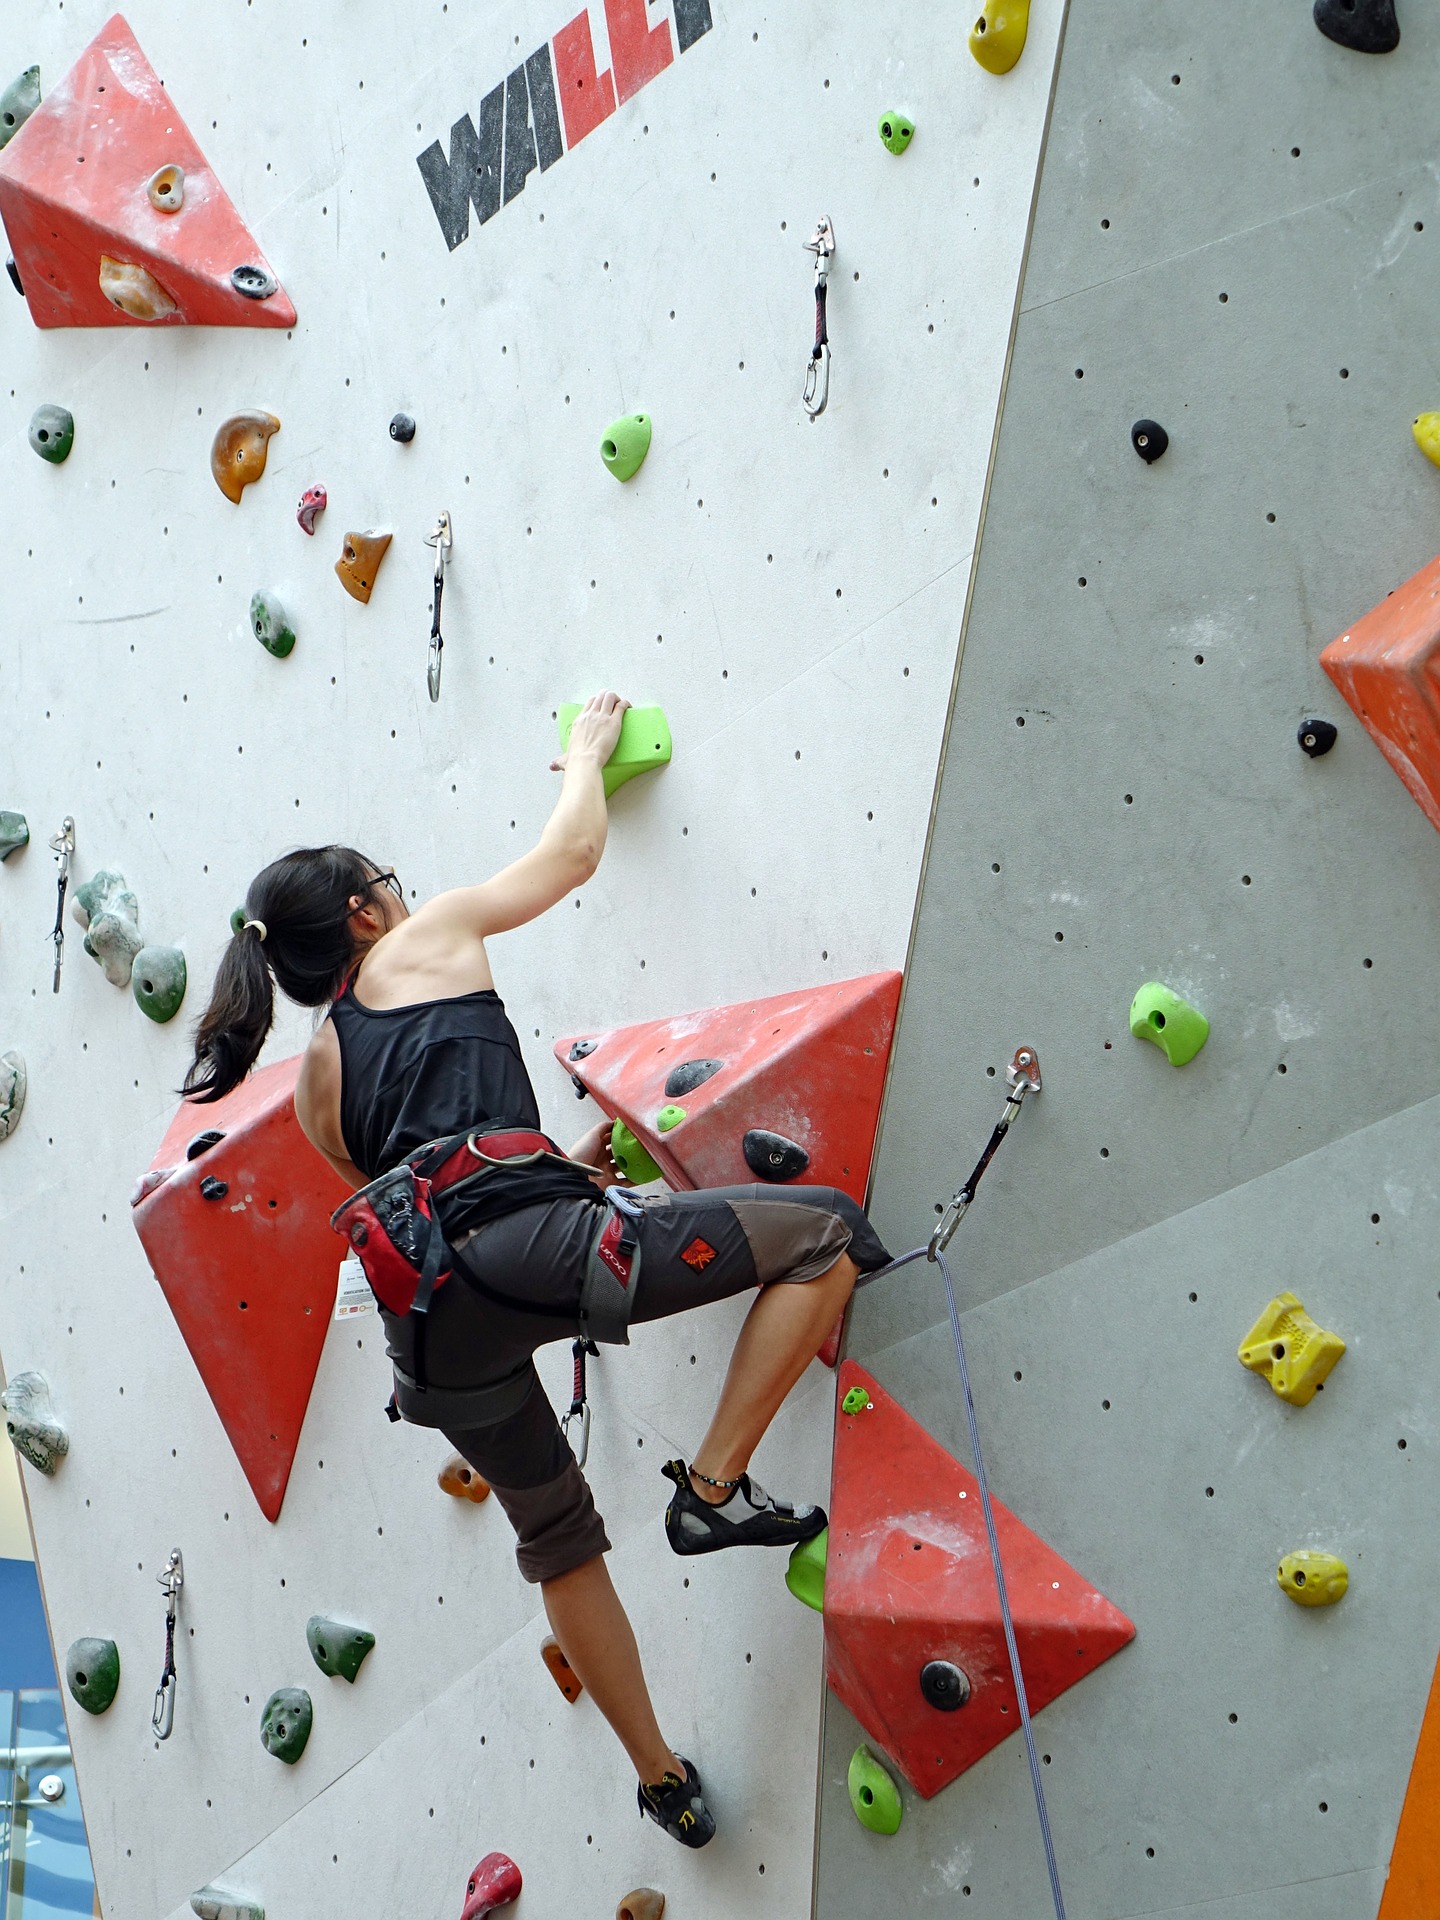 Do You Get a Cardio Workout Climbing Wall Routes?